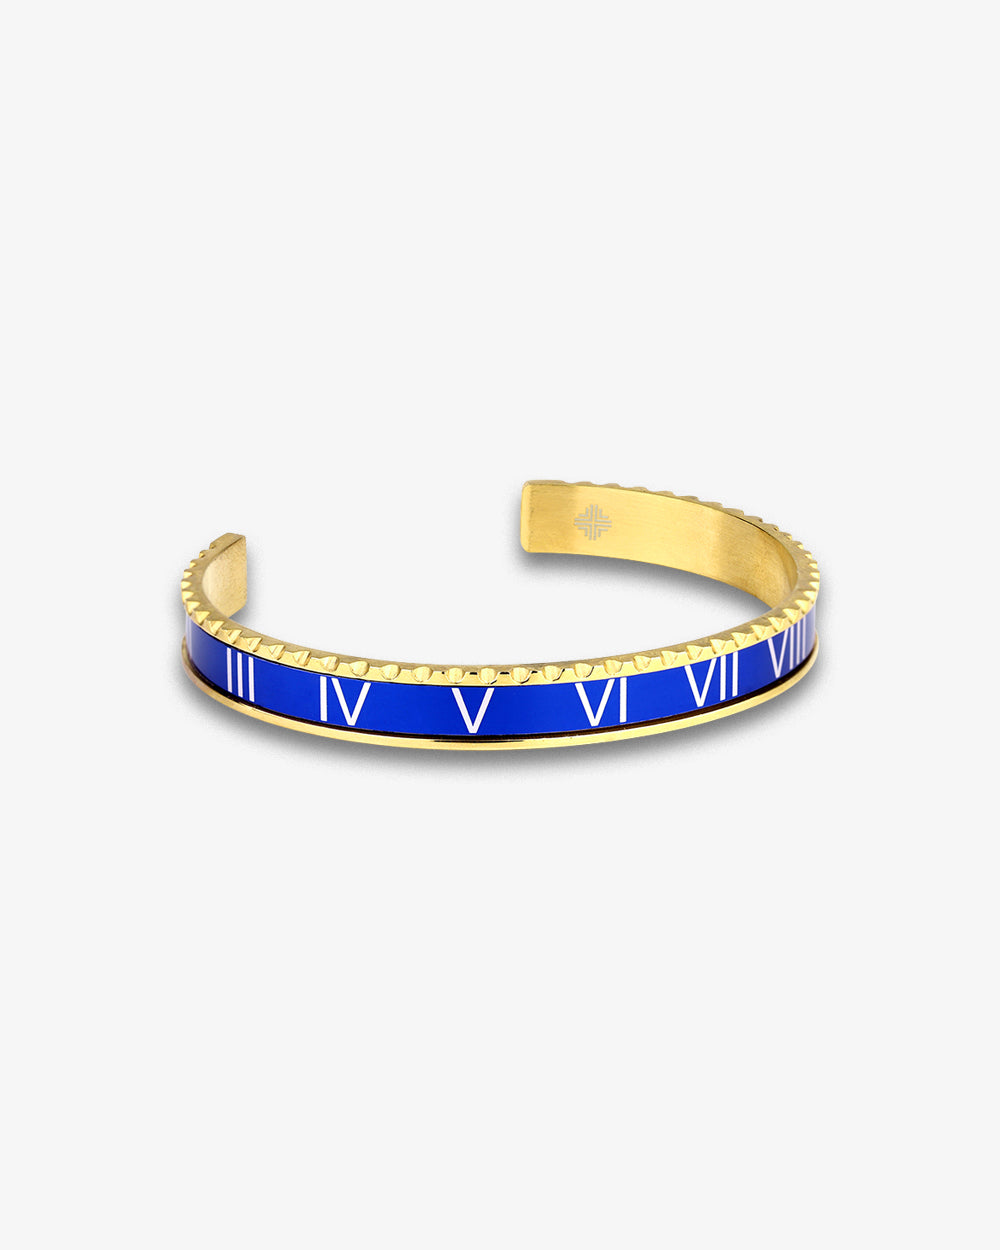 Swiss Concept Classic Roman Numeral Speed Bracelet (Blue & Yellow Gold) - 18 Karat Finish